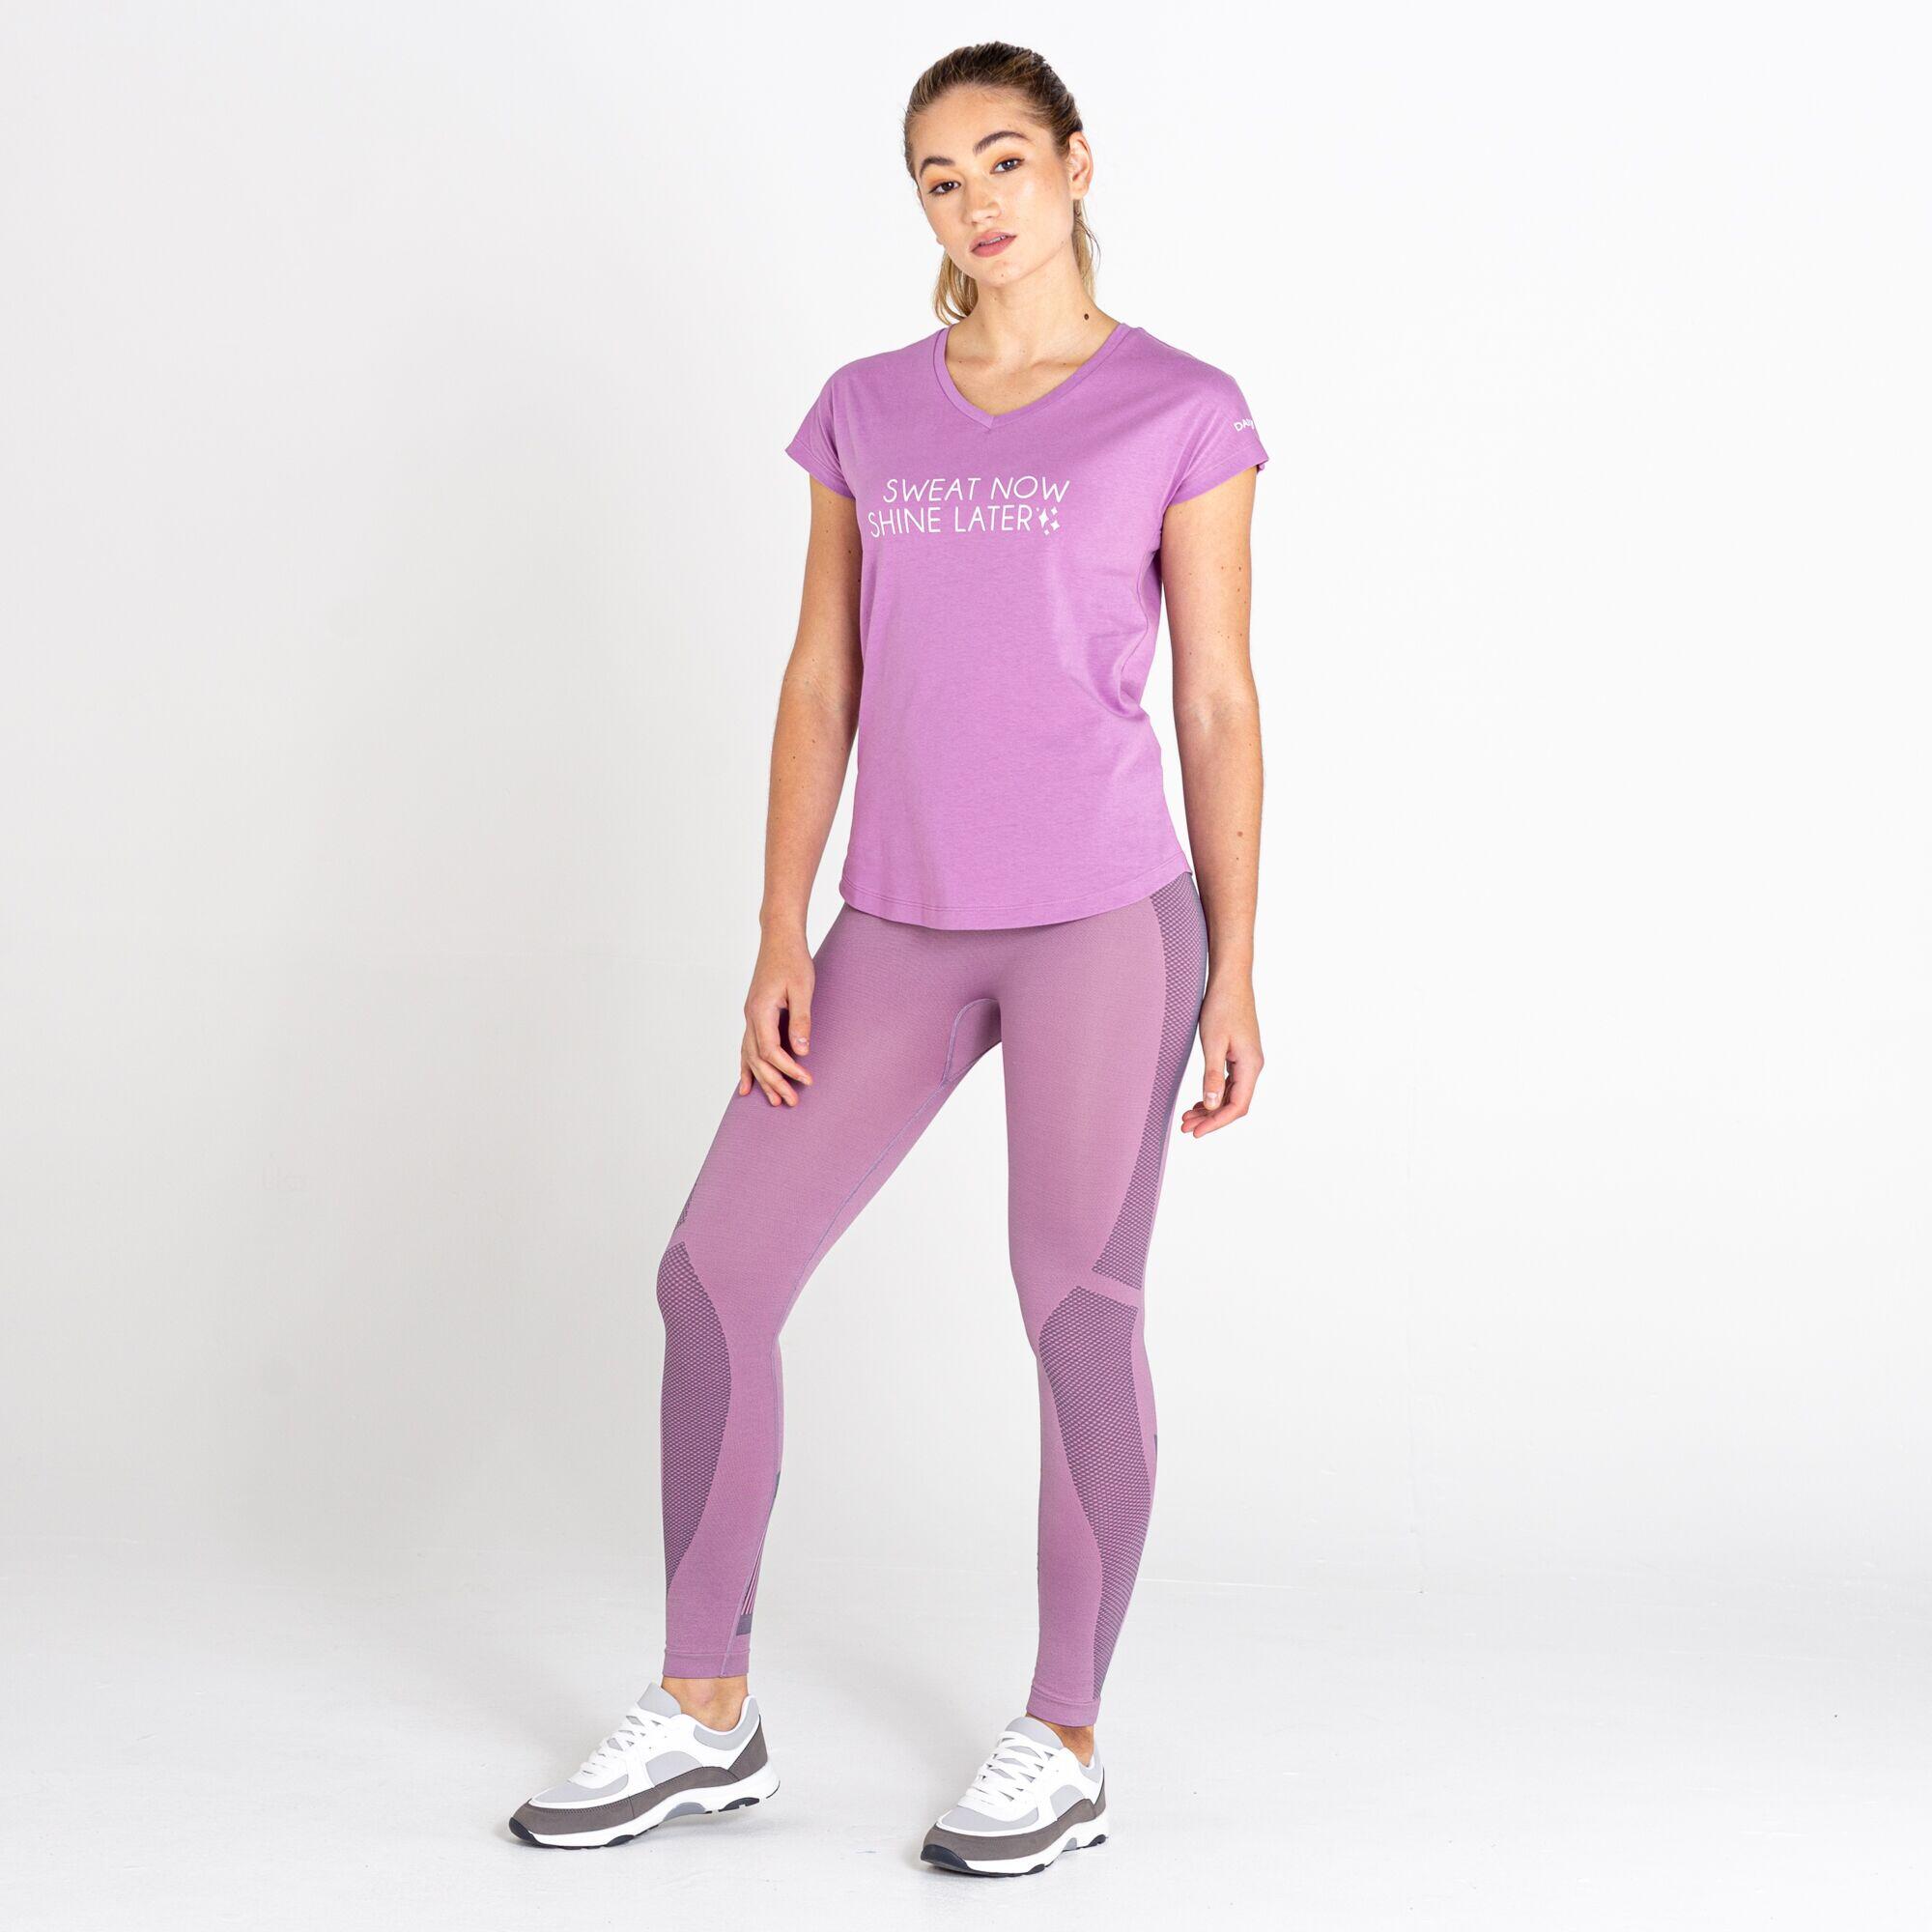 Moments II Women's Fitness Short Sleeve T-Shirt - Dusty Lavender 2/4